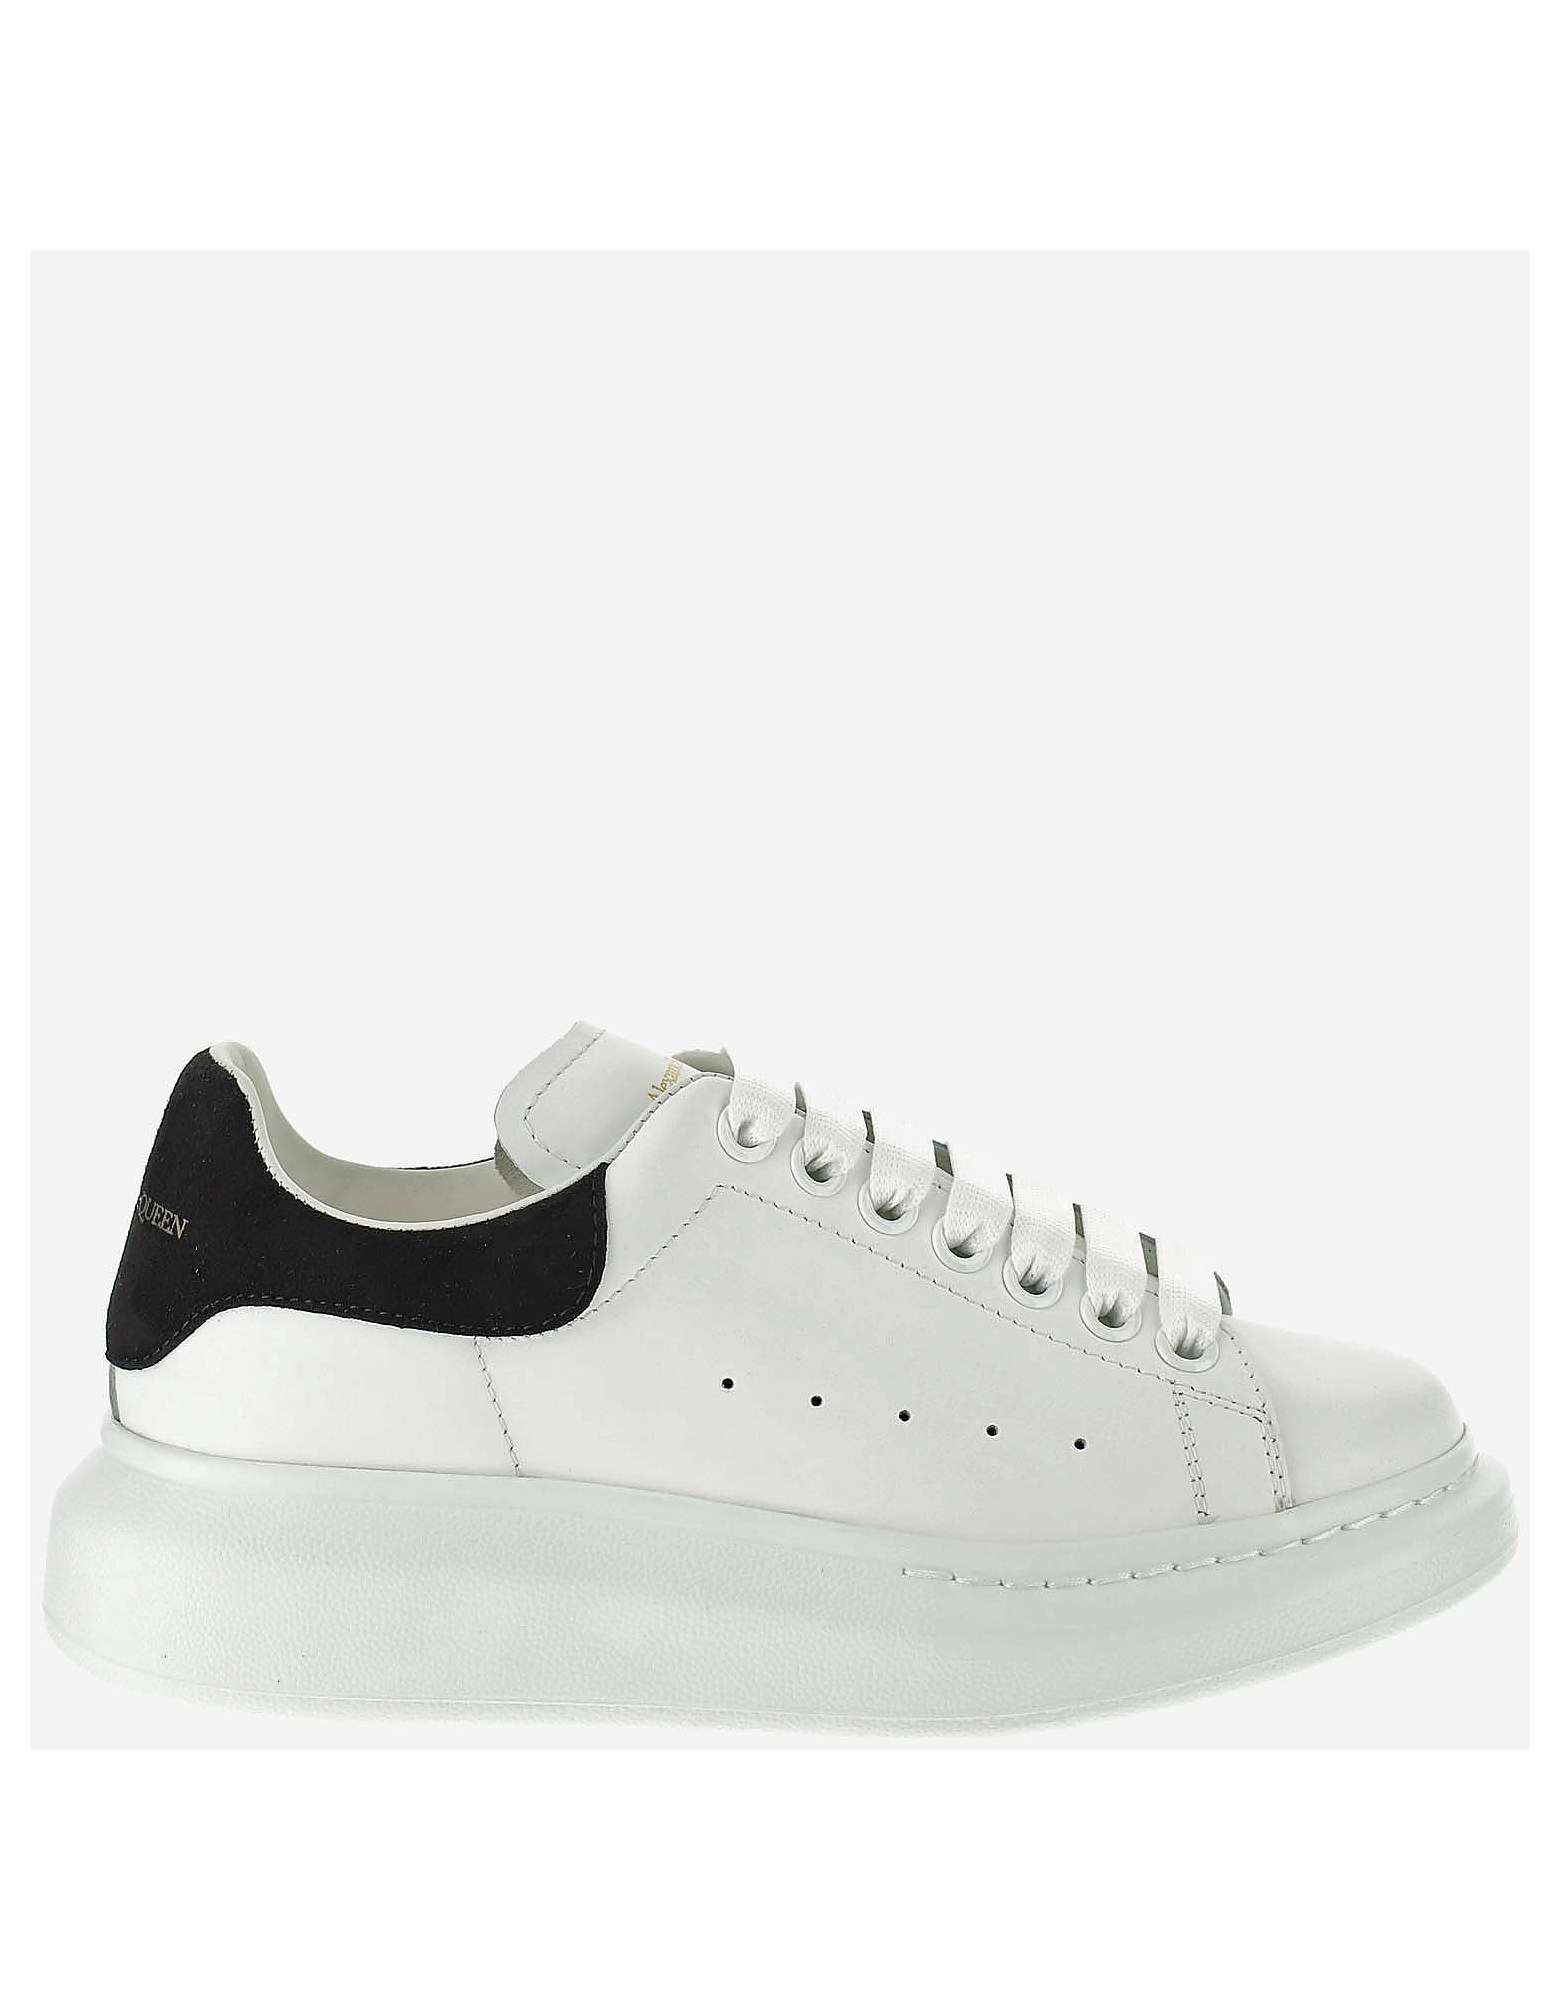 Alexander McQueen Designer Shoes, White Sneakers